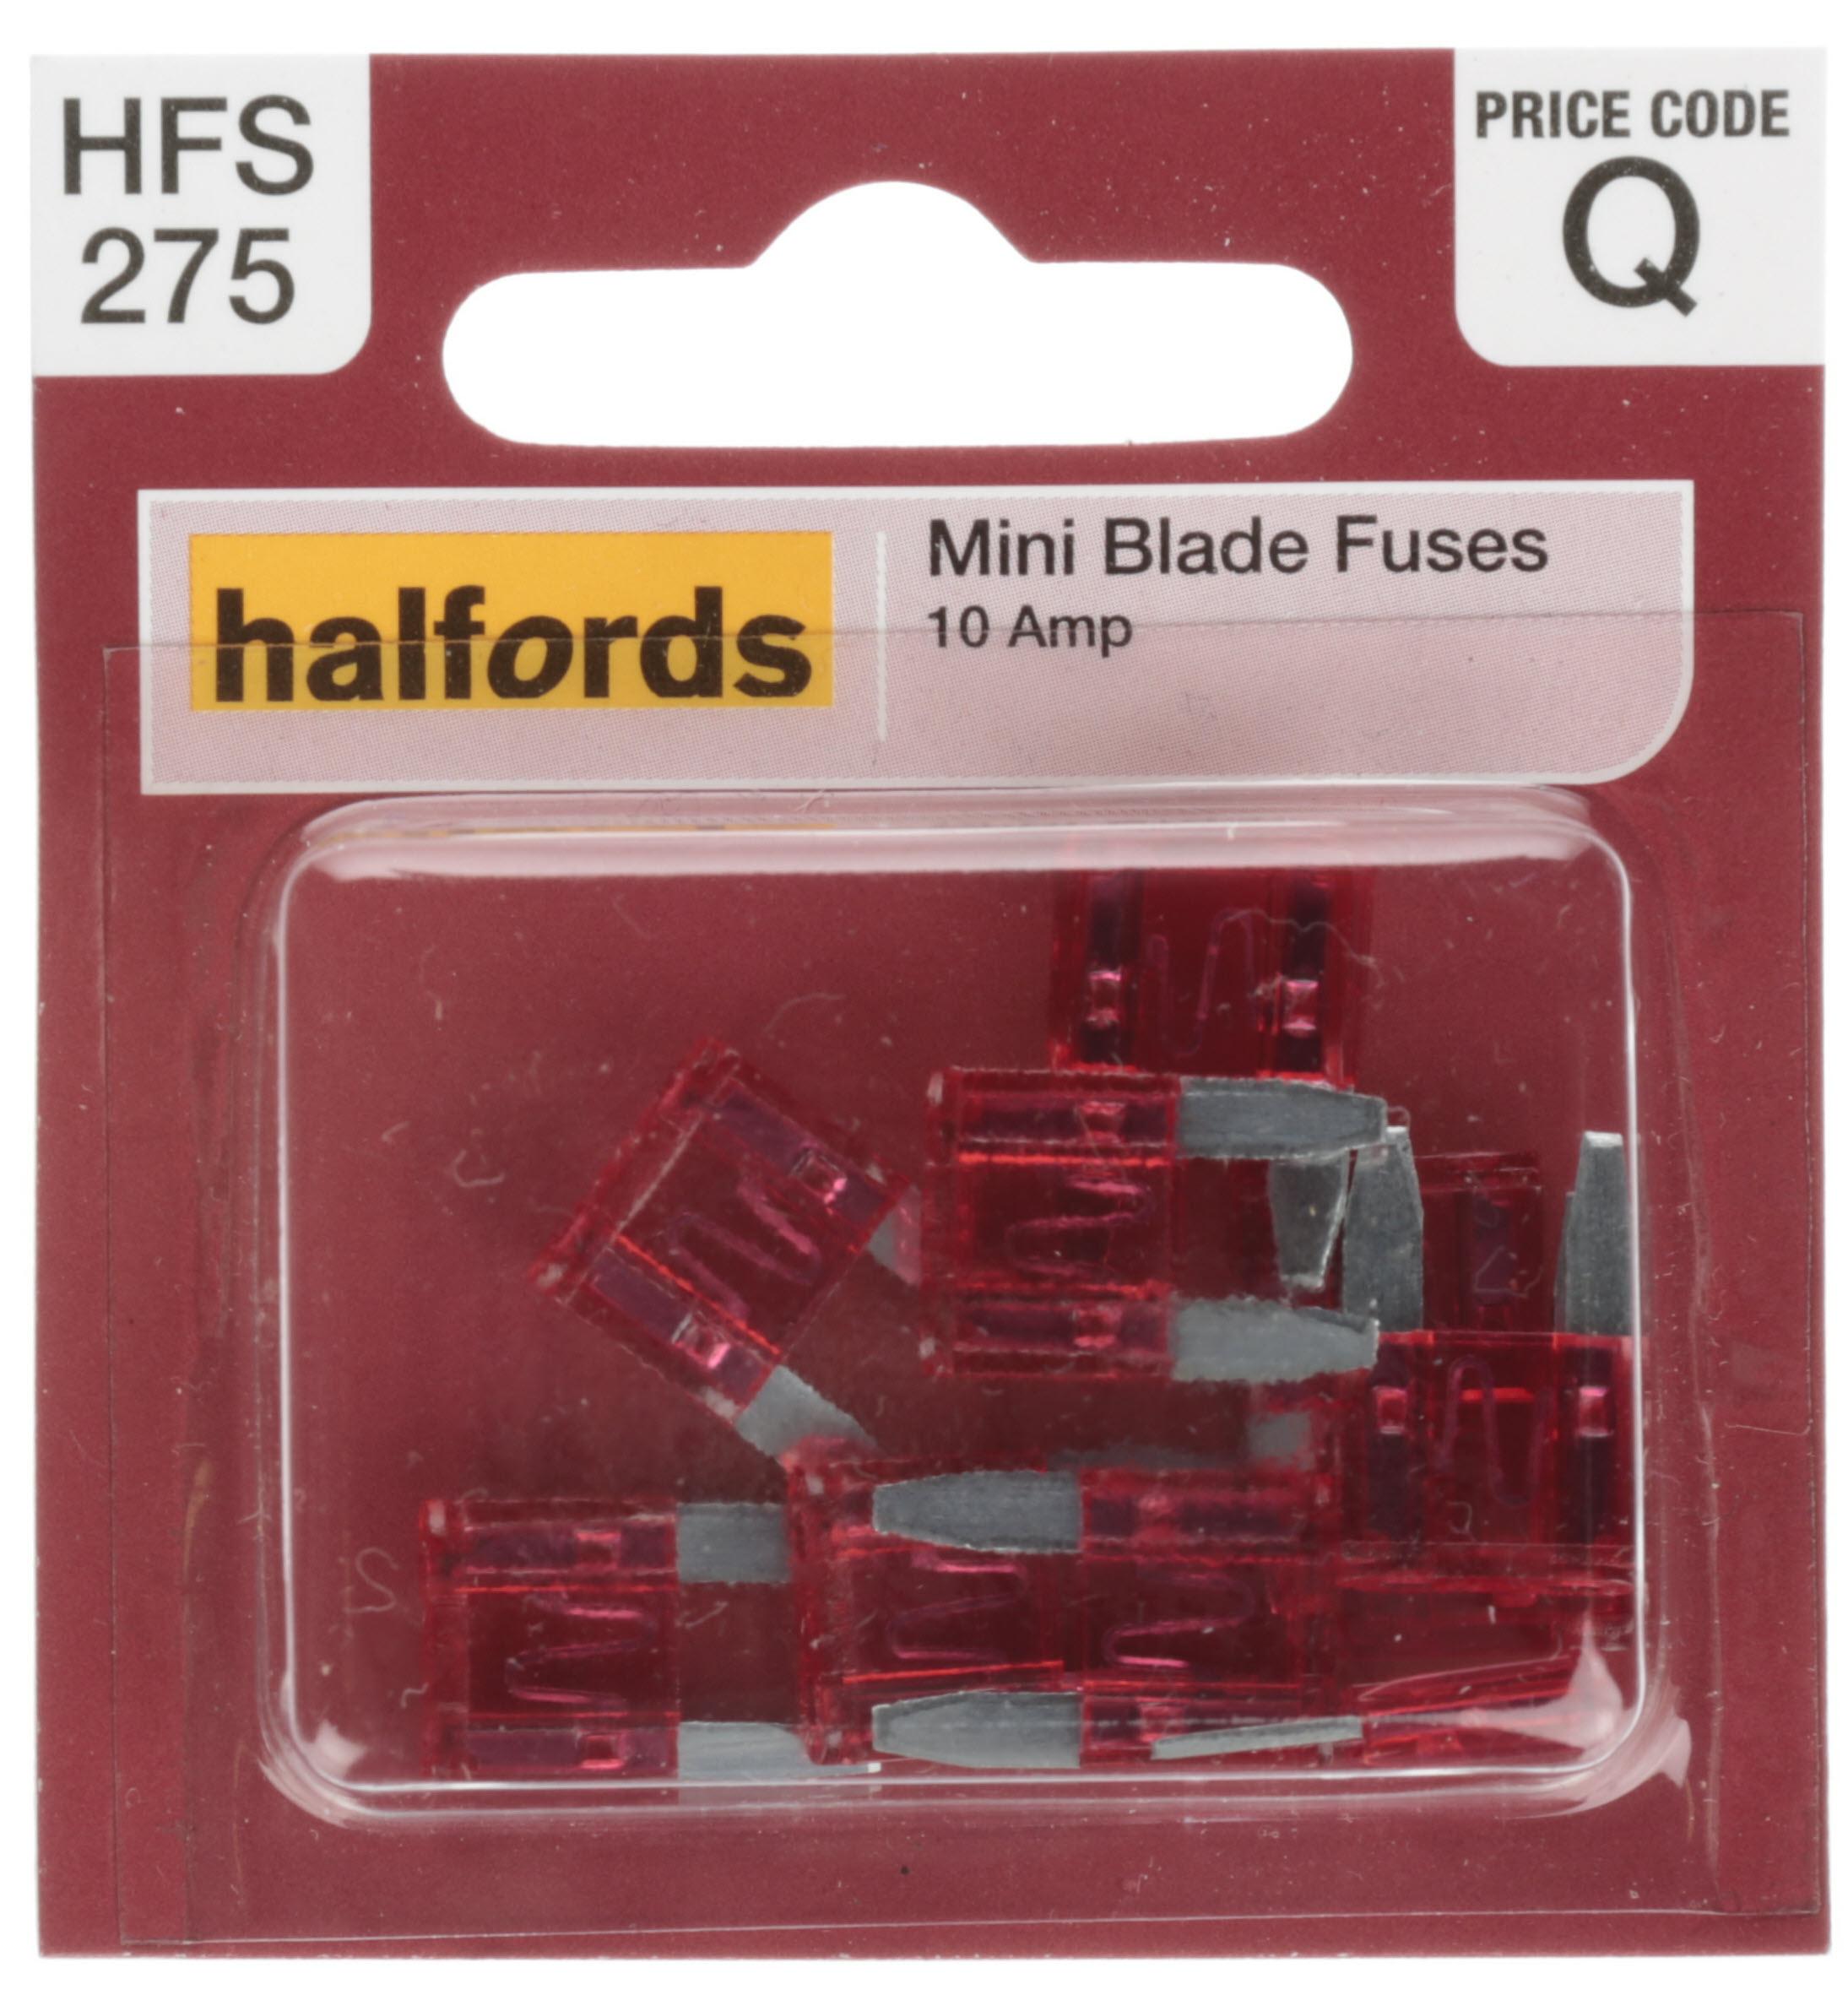 Halfords Mini Blade Fuses 10 Amp (Hfs275)